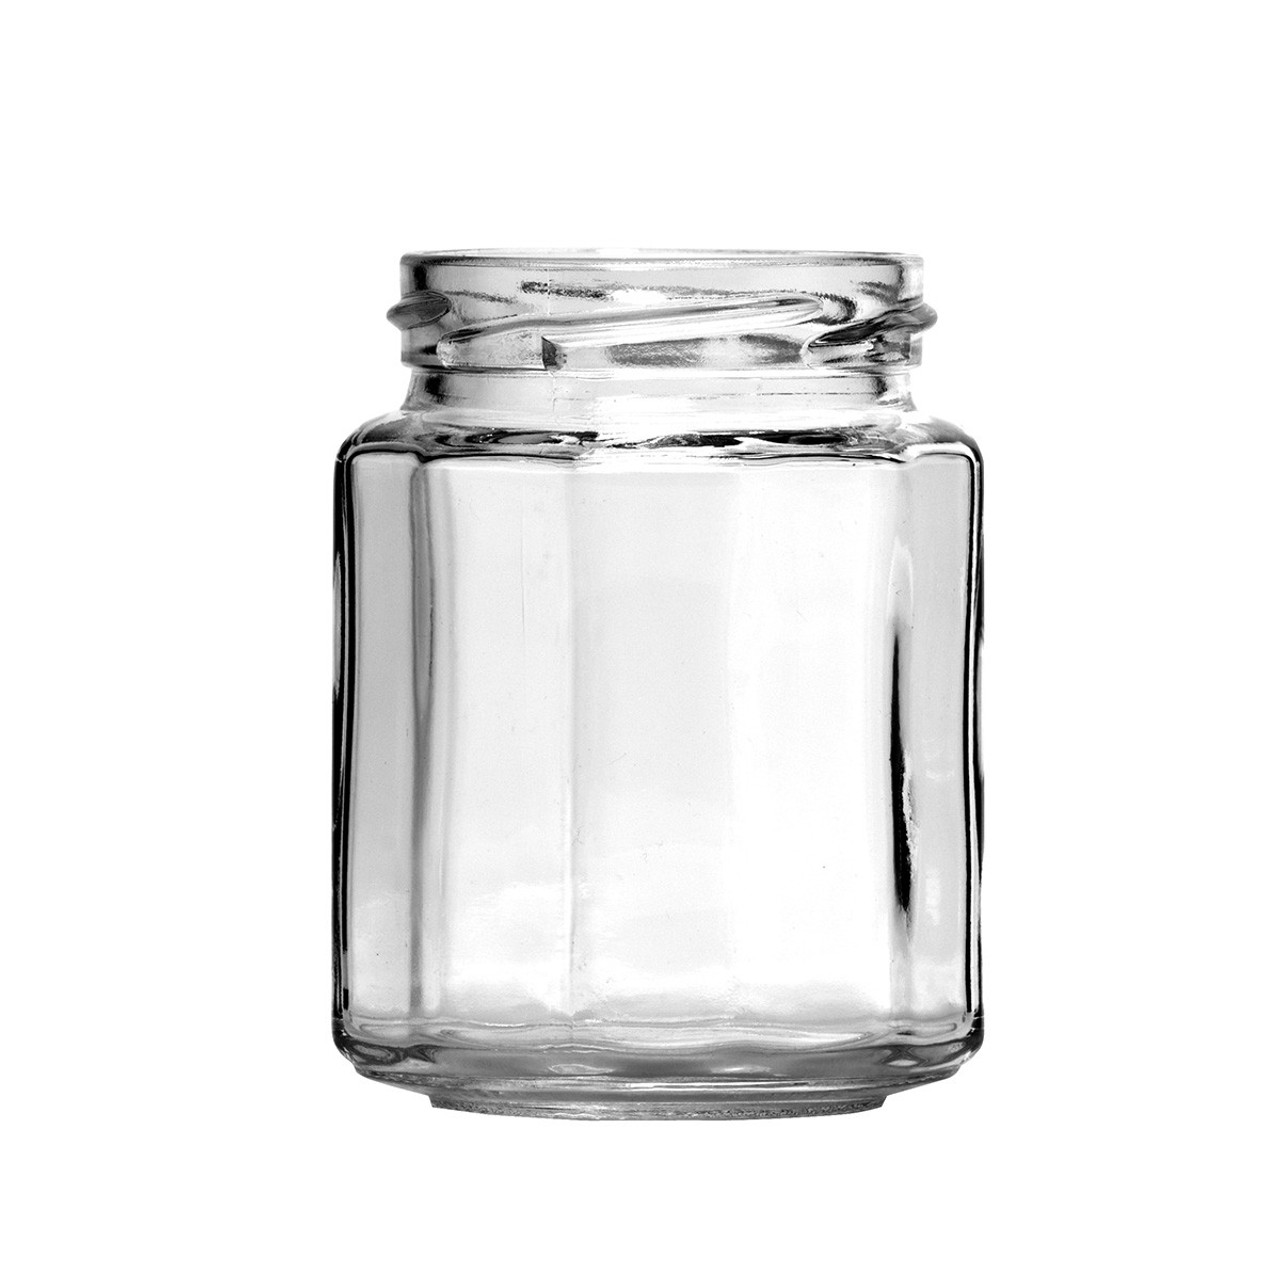 NEW - No-Color Natural Soy Wax Candle - 10oz Jar Size